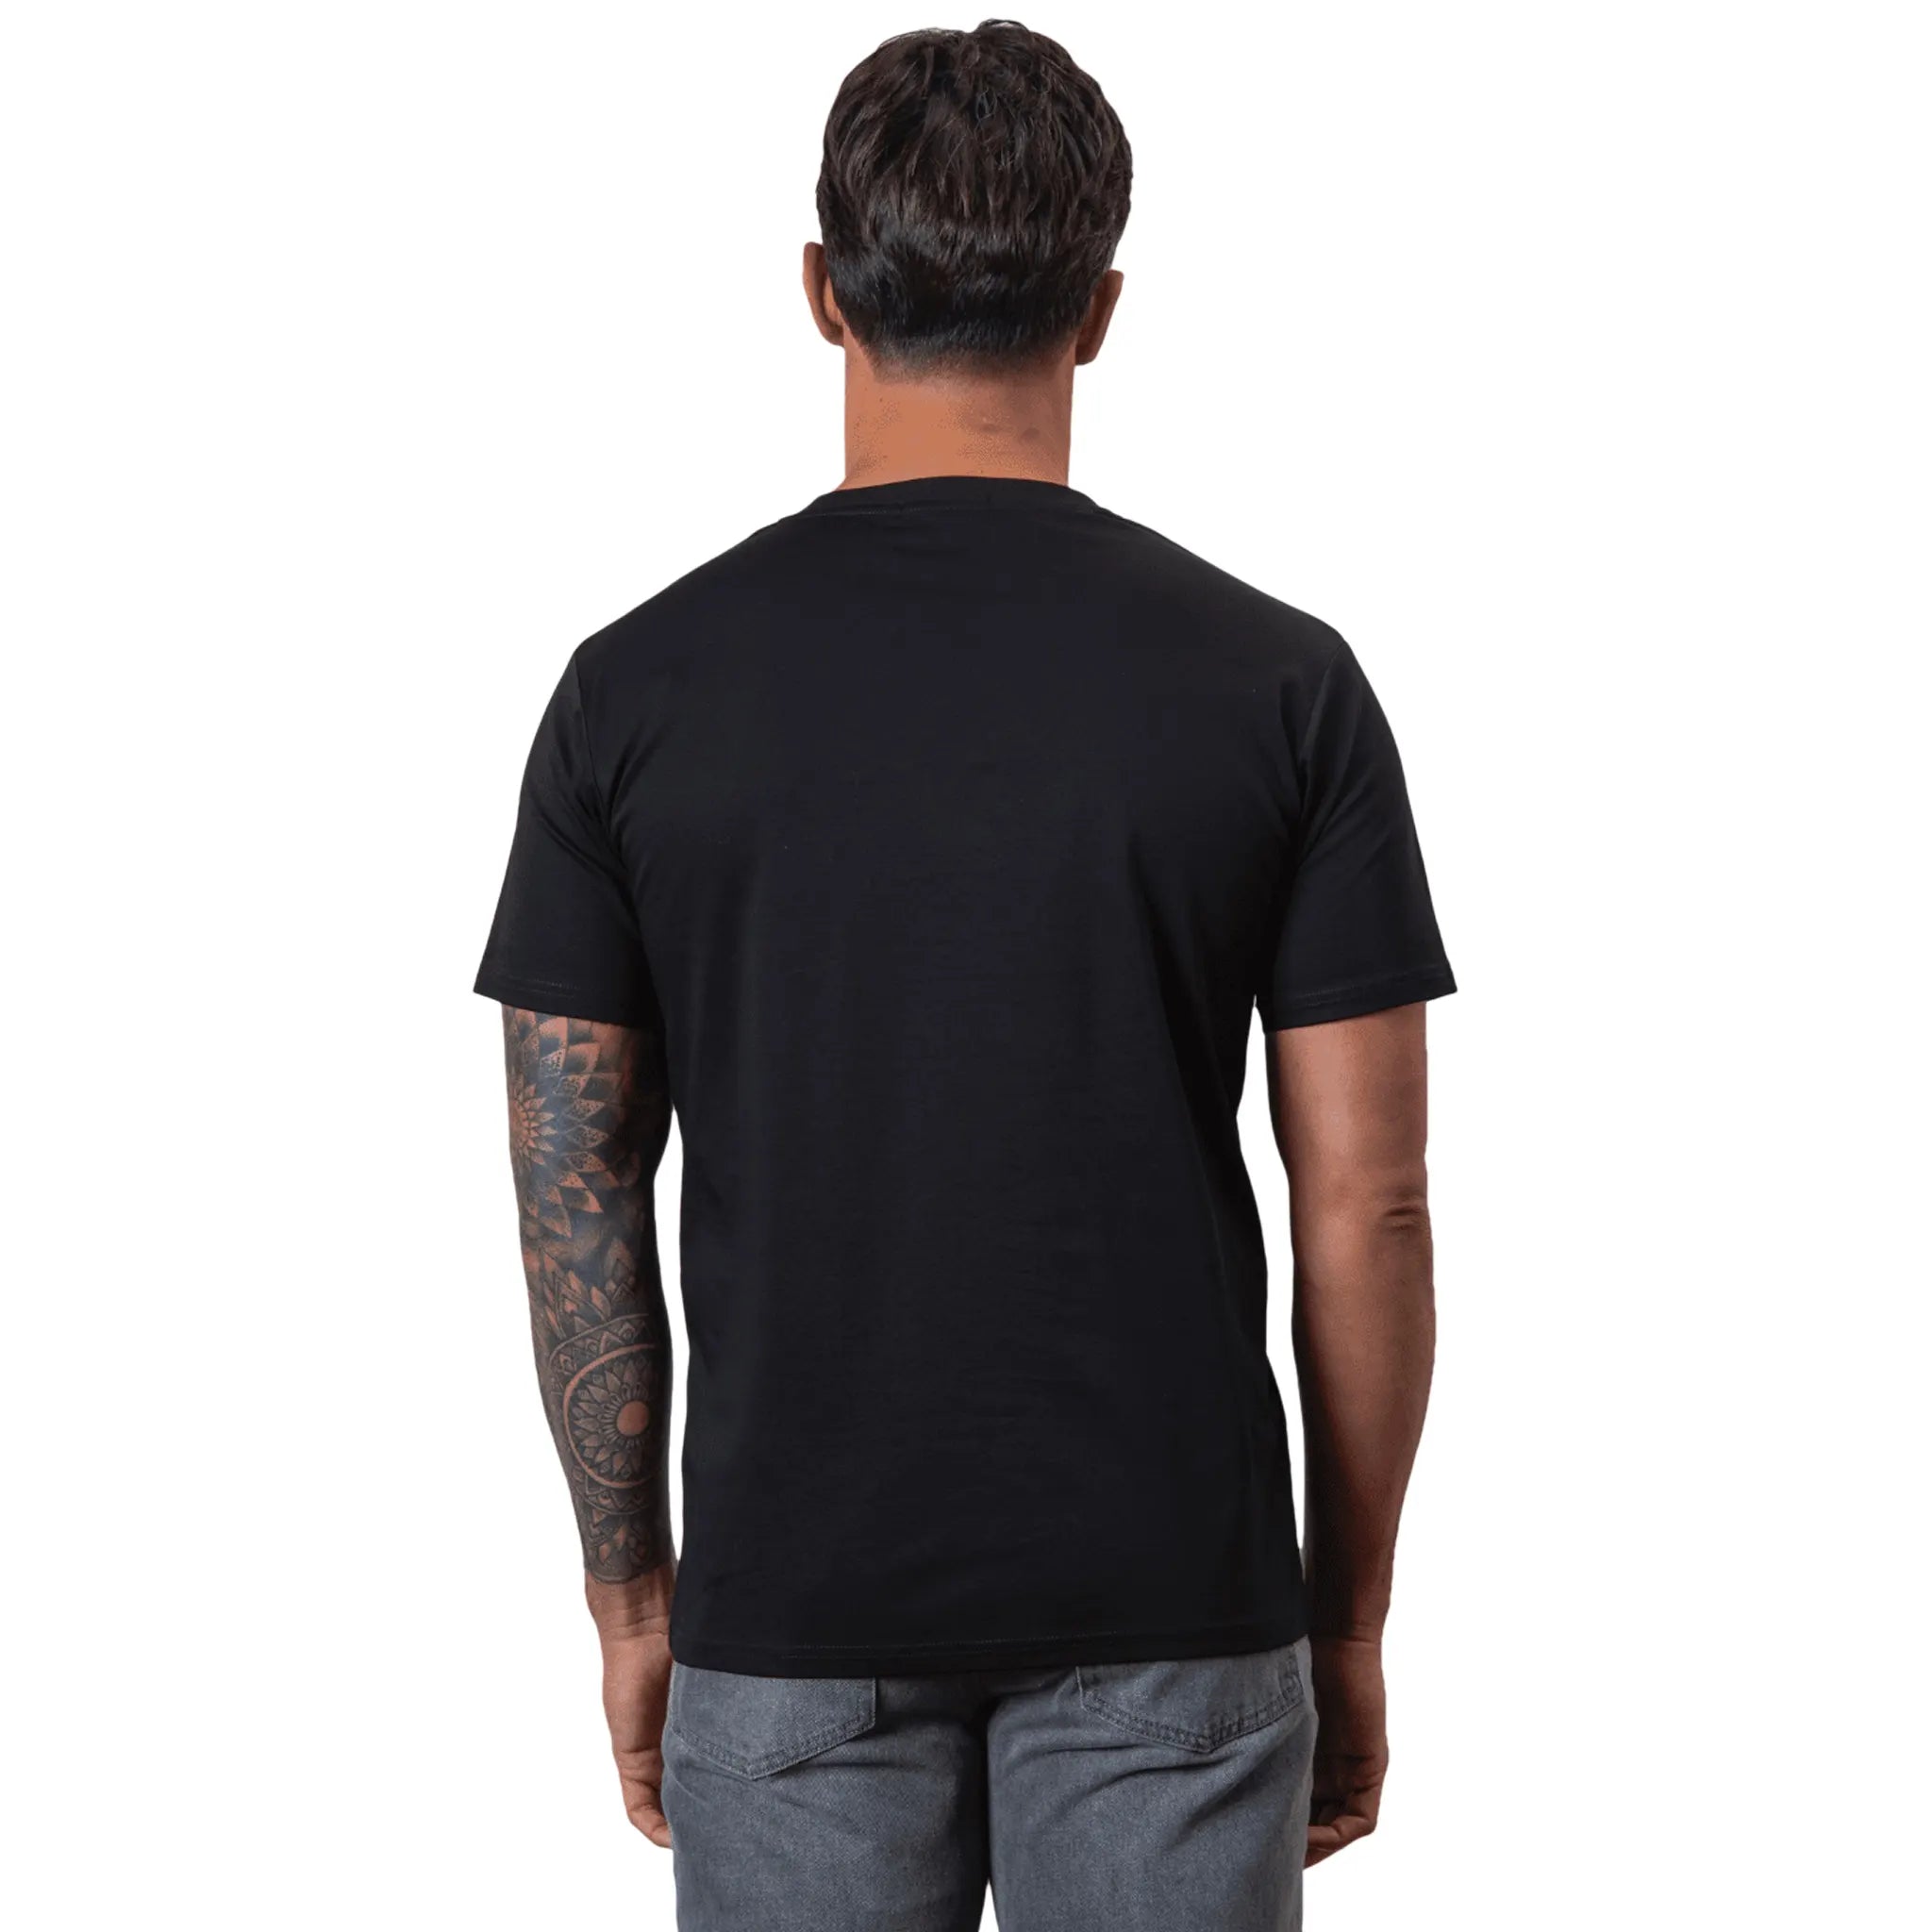 Back Detail view of Belier Mercerised Cotton Short Sleeve Premium Black T Shirt BM-125